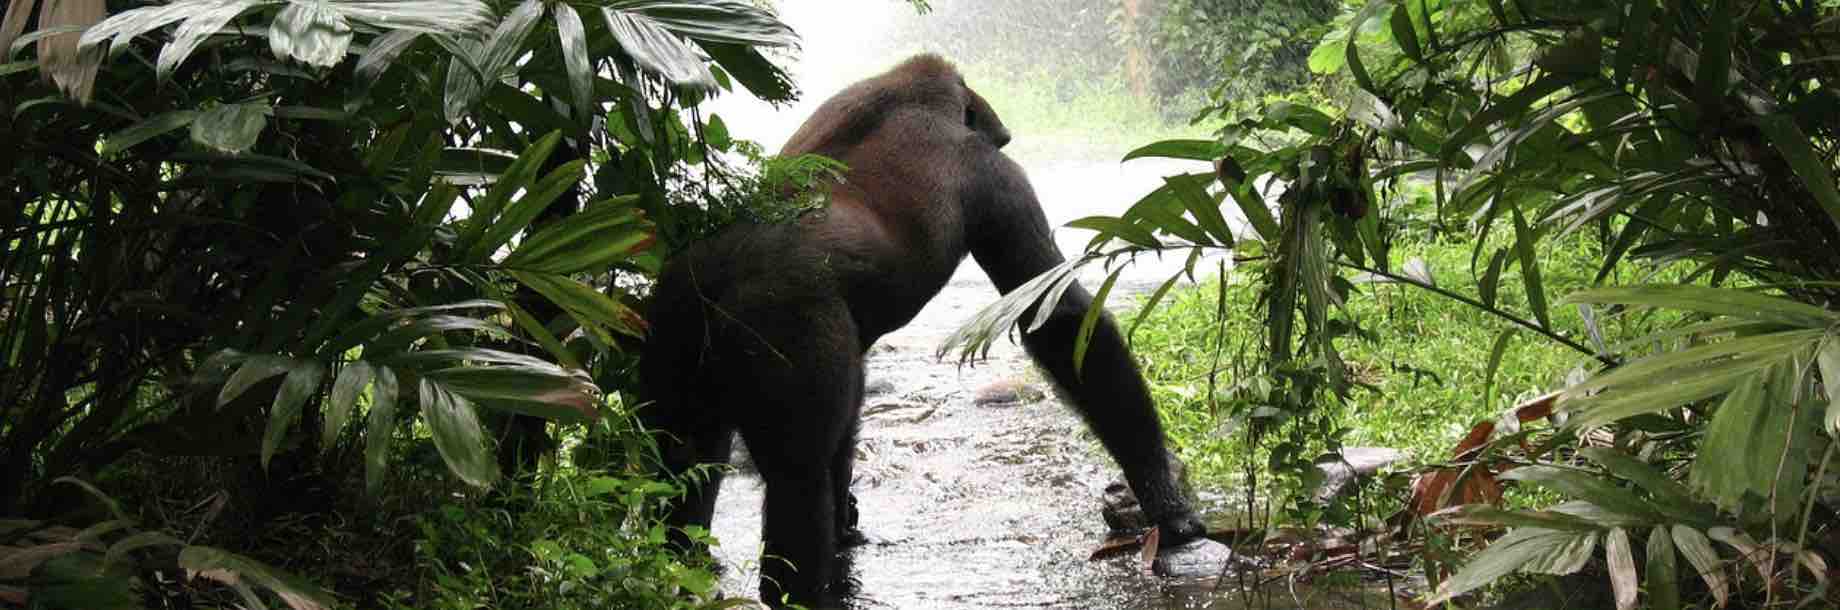 gorilla animal tourism